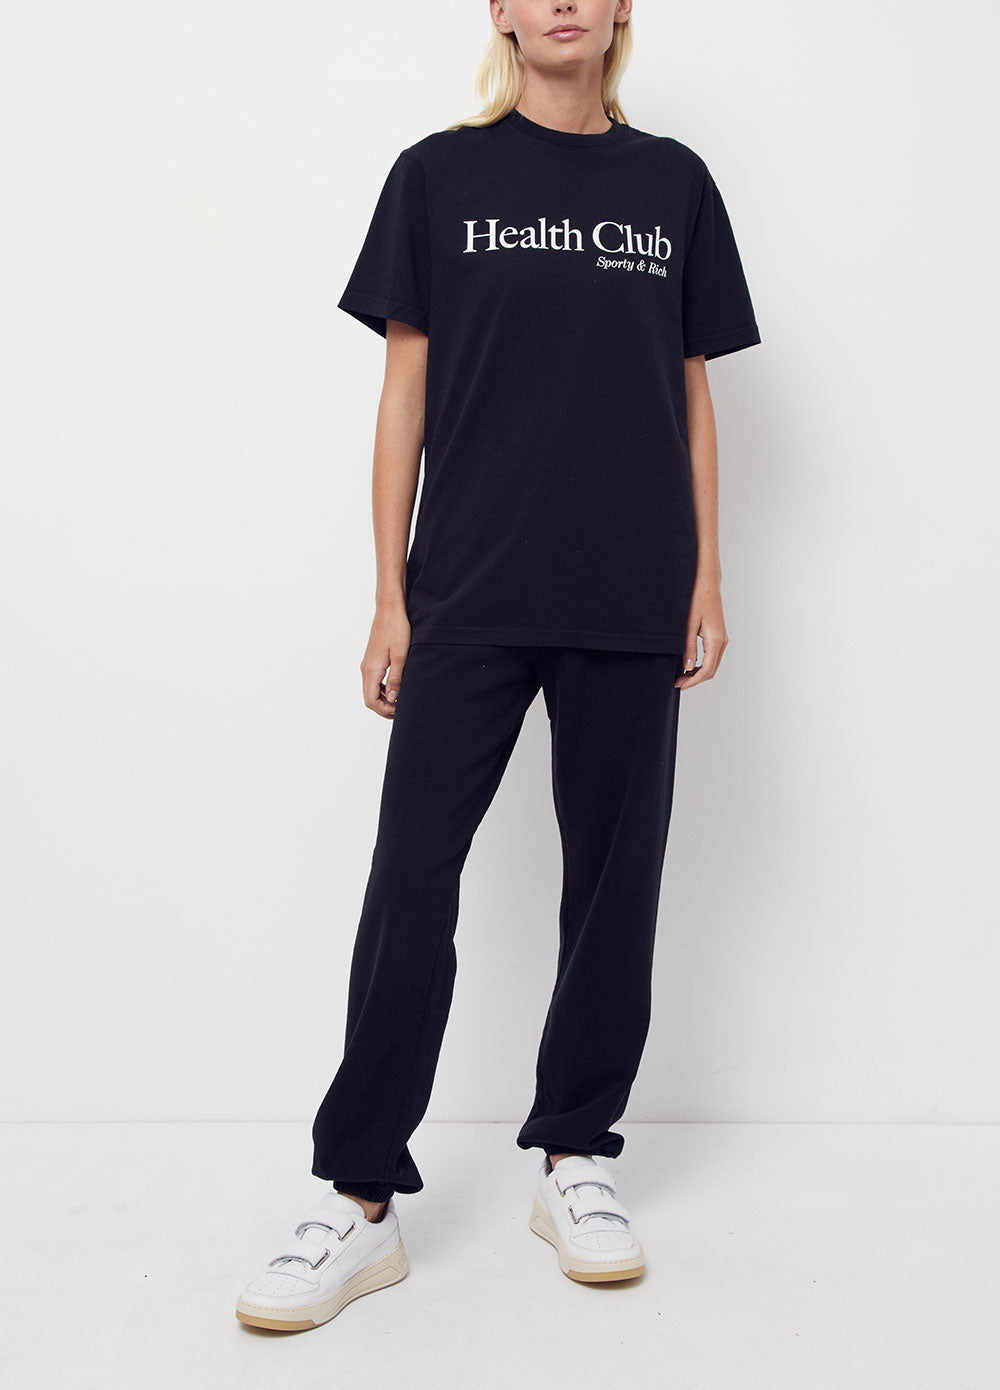 Health Club T-shirt